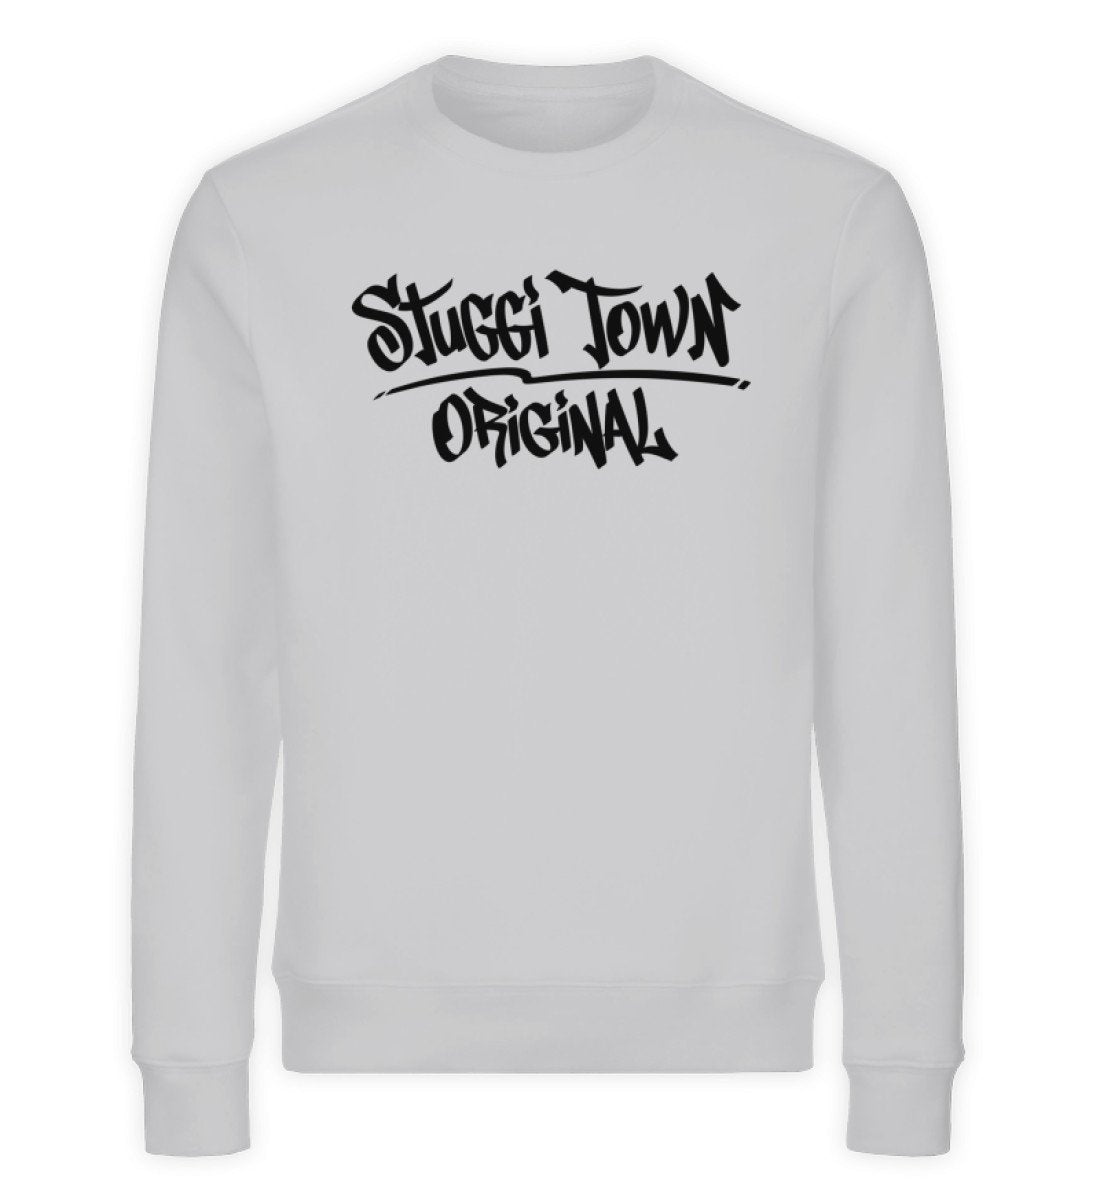 Stuggi Town® Original Changer Sweatshirt - Unisex Organic Sweatshirt